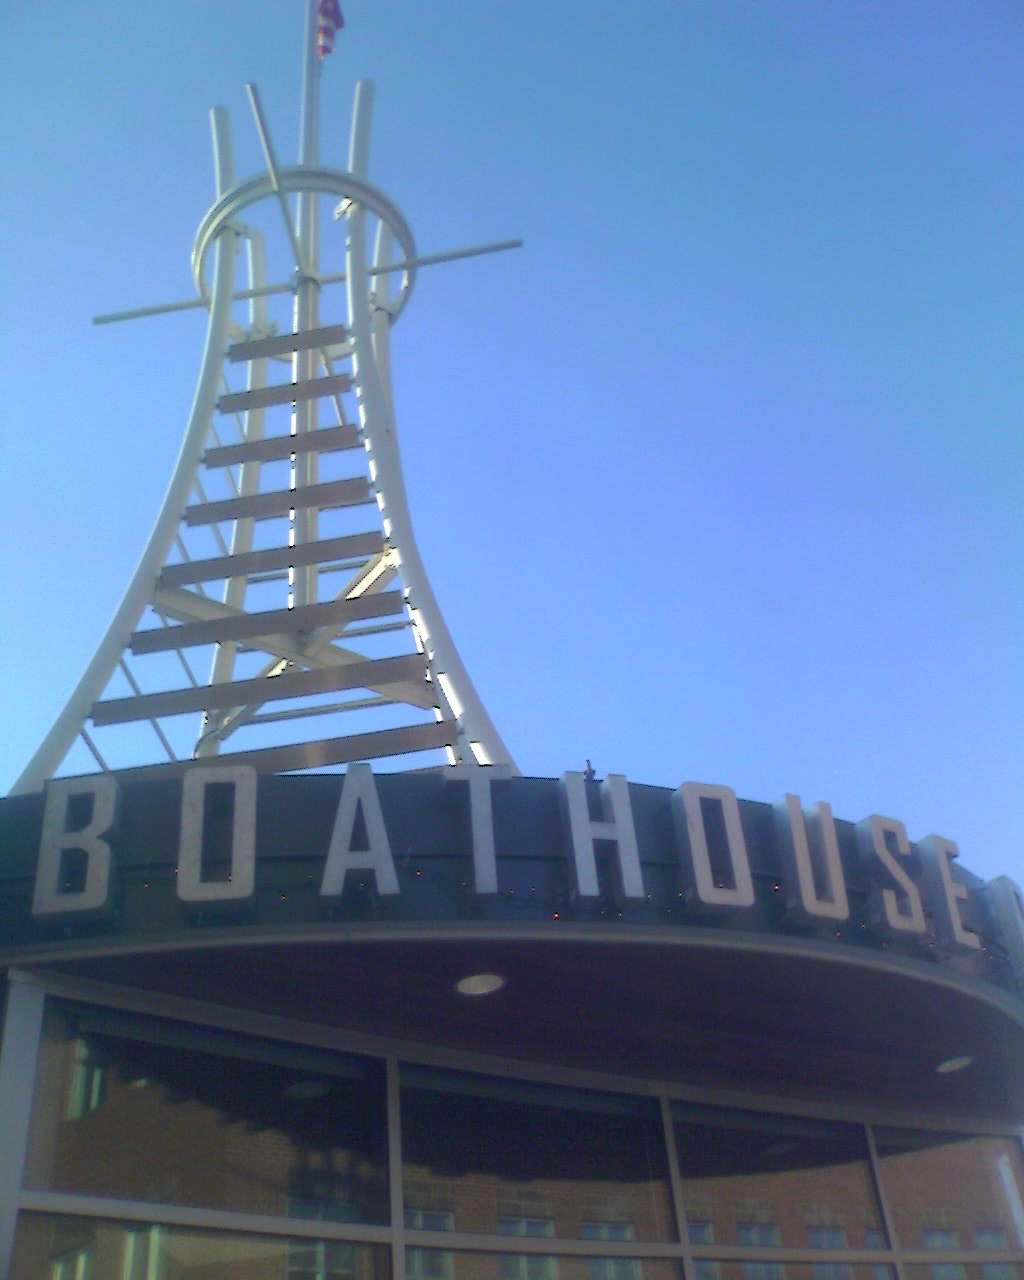 [BoatHouse.JPG]